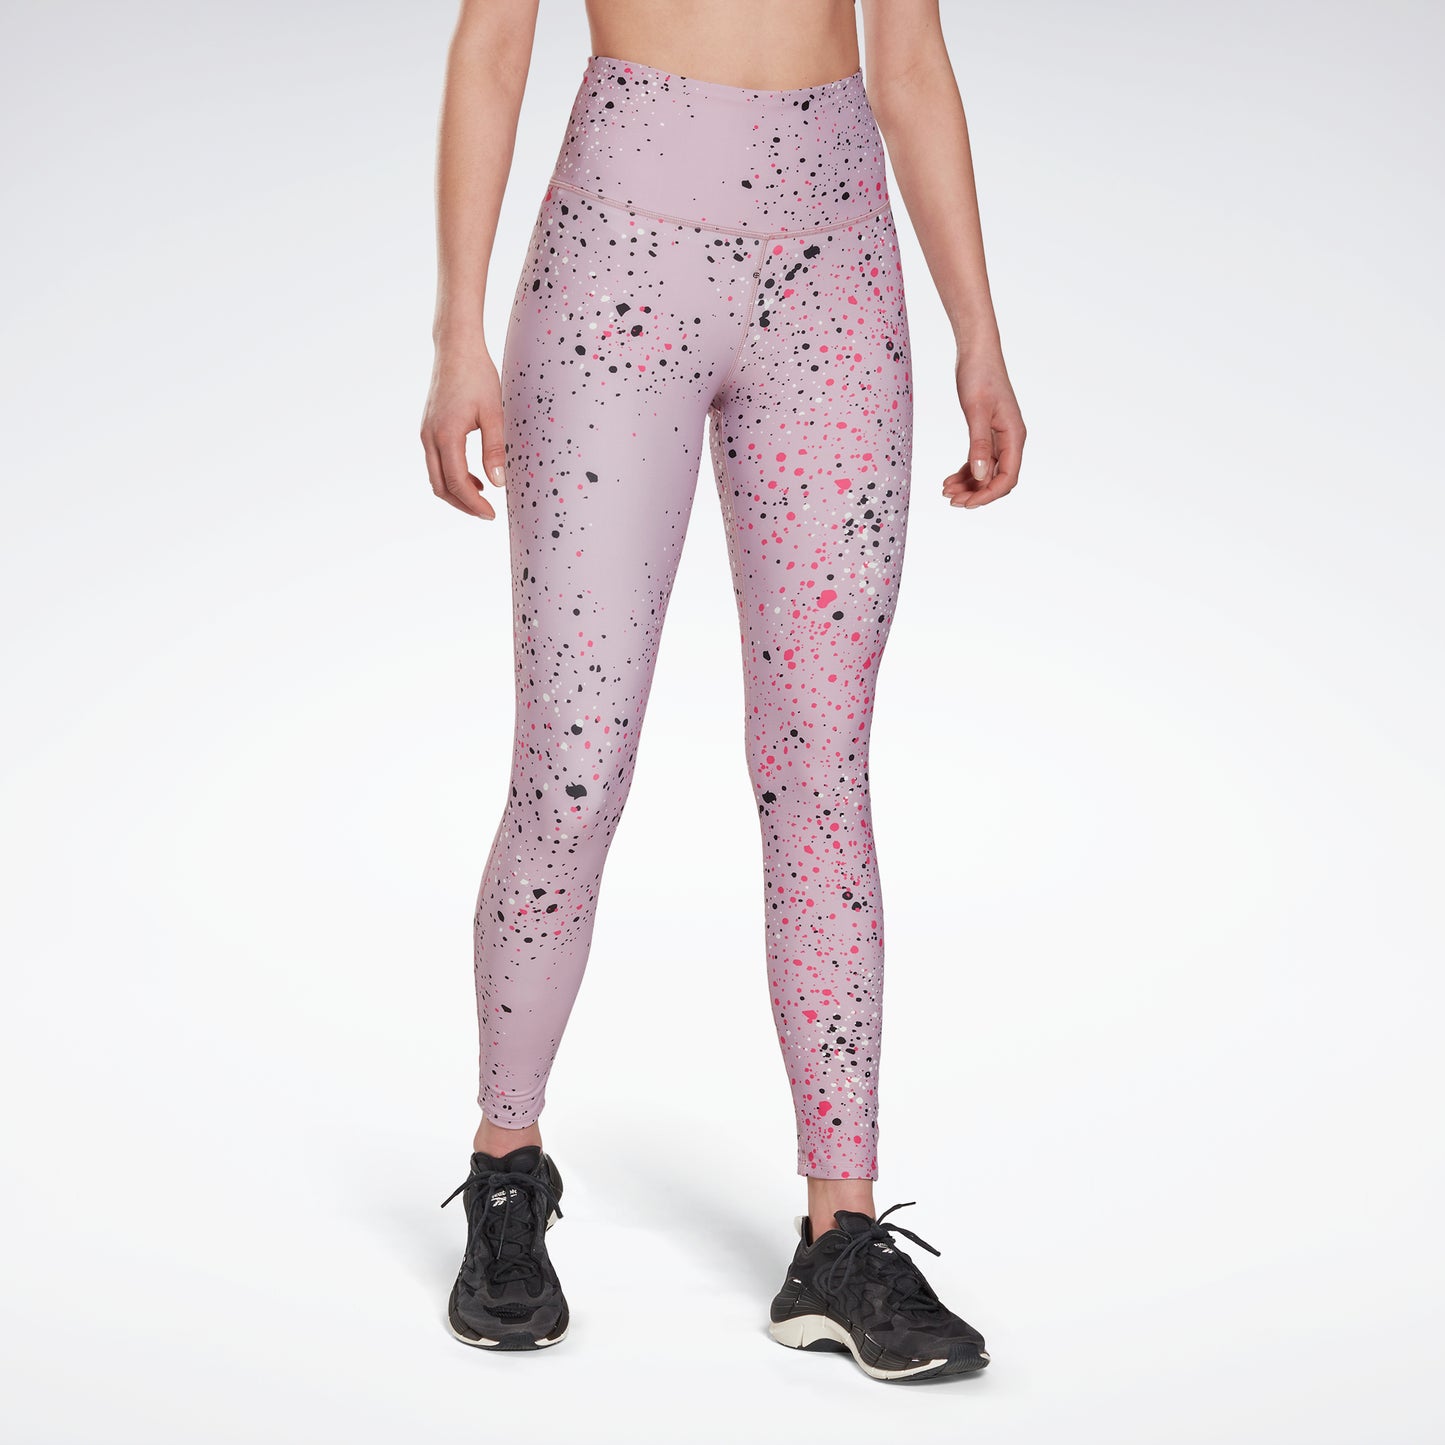 Victoria's Secret Pink Dots Yoga Pants  Fashion pants, Pink outfits  victoria secret, Yoga pants fashion